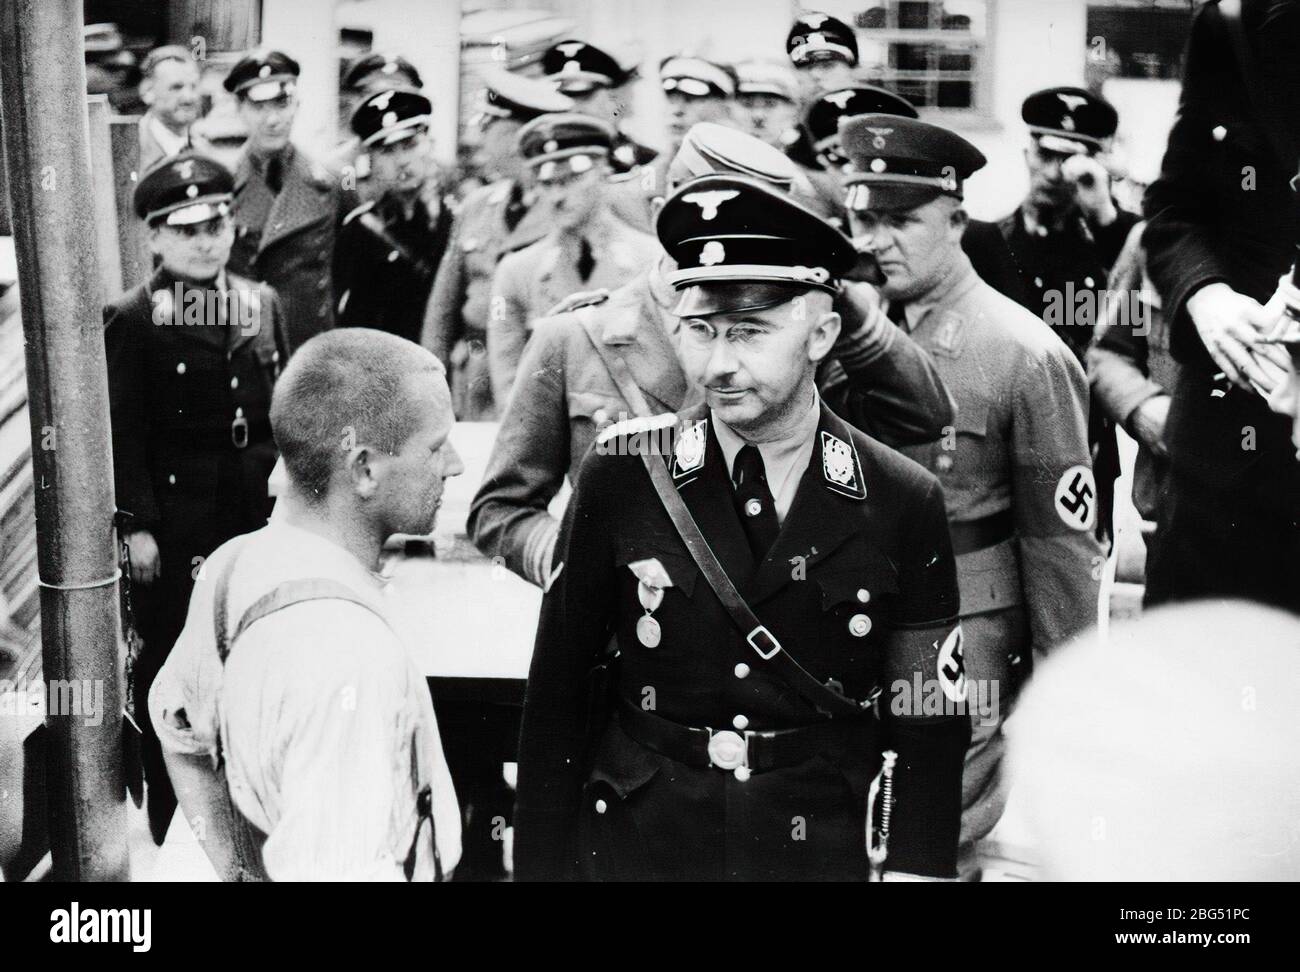 Dokumentation zum Zweiten Weltkrieg. SS-Kommandant Heinrich Himmler inspiziert das KZ Dachau, 1936 Stockfoto